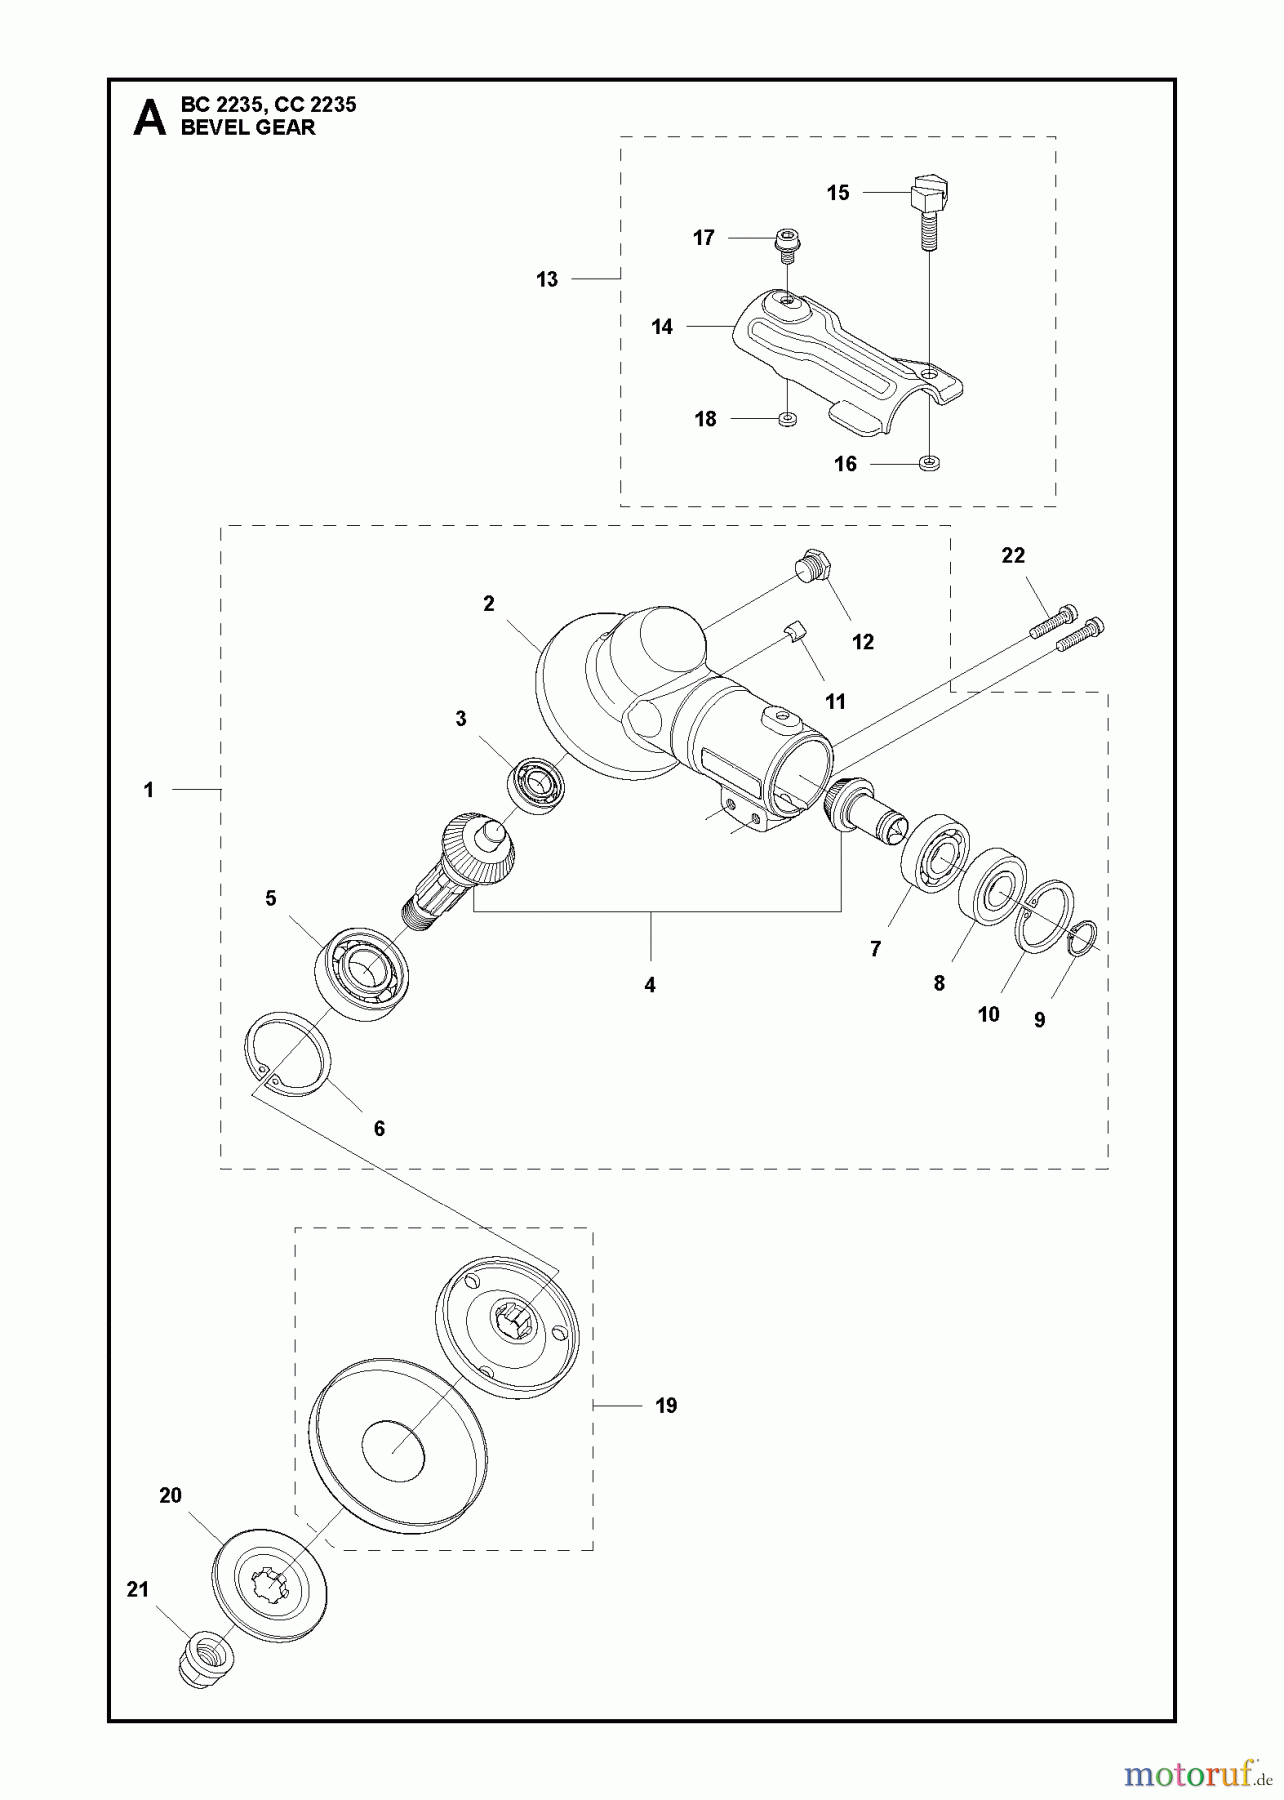  Jonsered Motorsensen, Trimmer BC2235 - Jonsered Brushcutter (2011-02) BEVEL GEAR